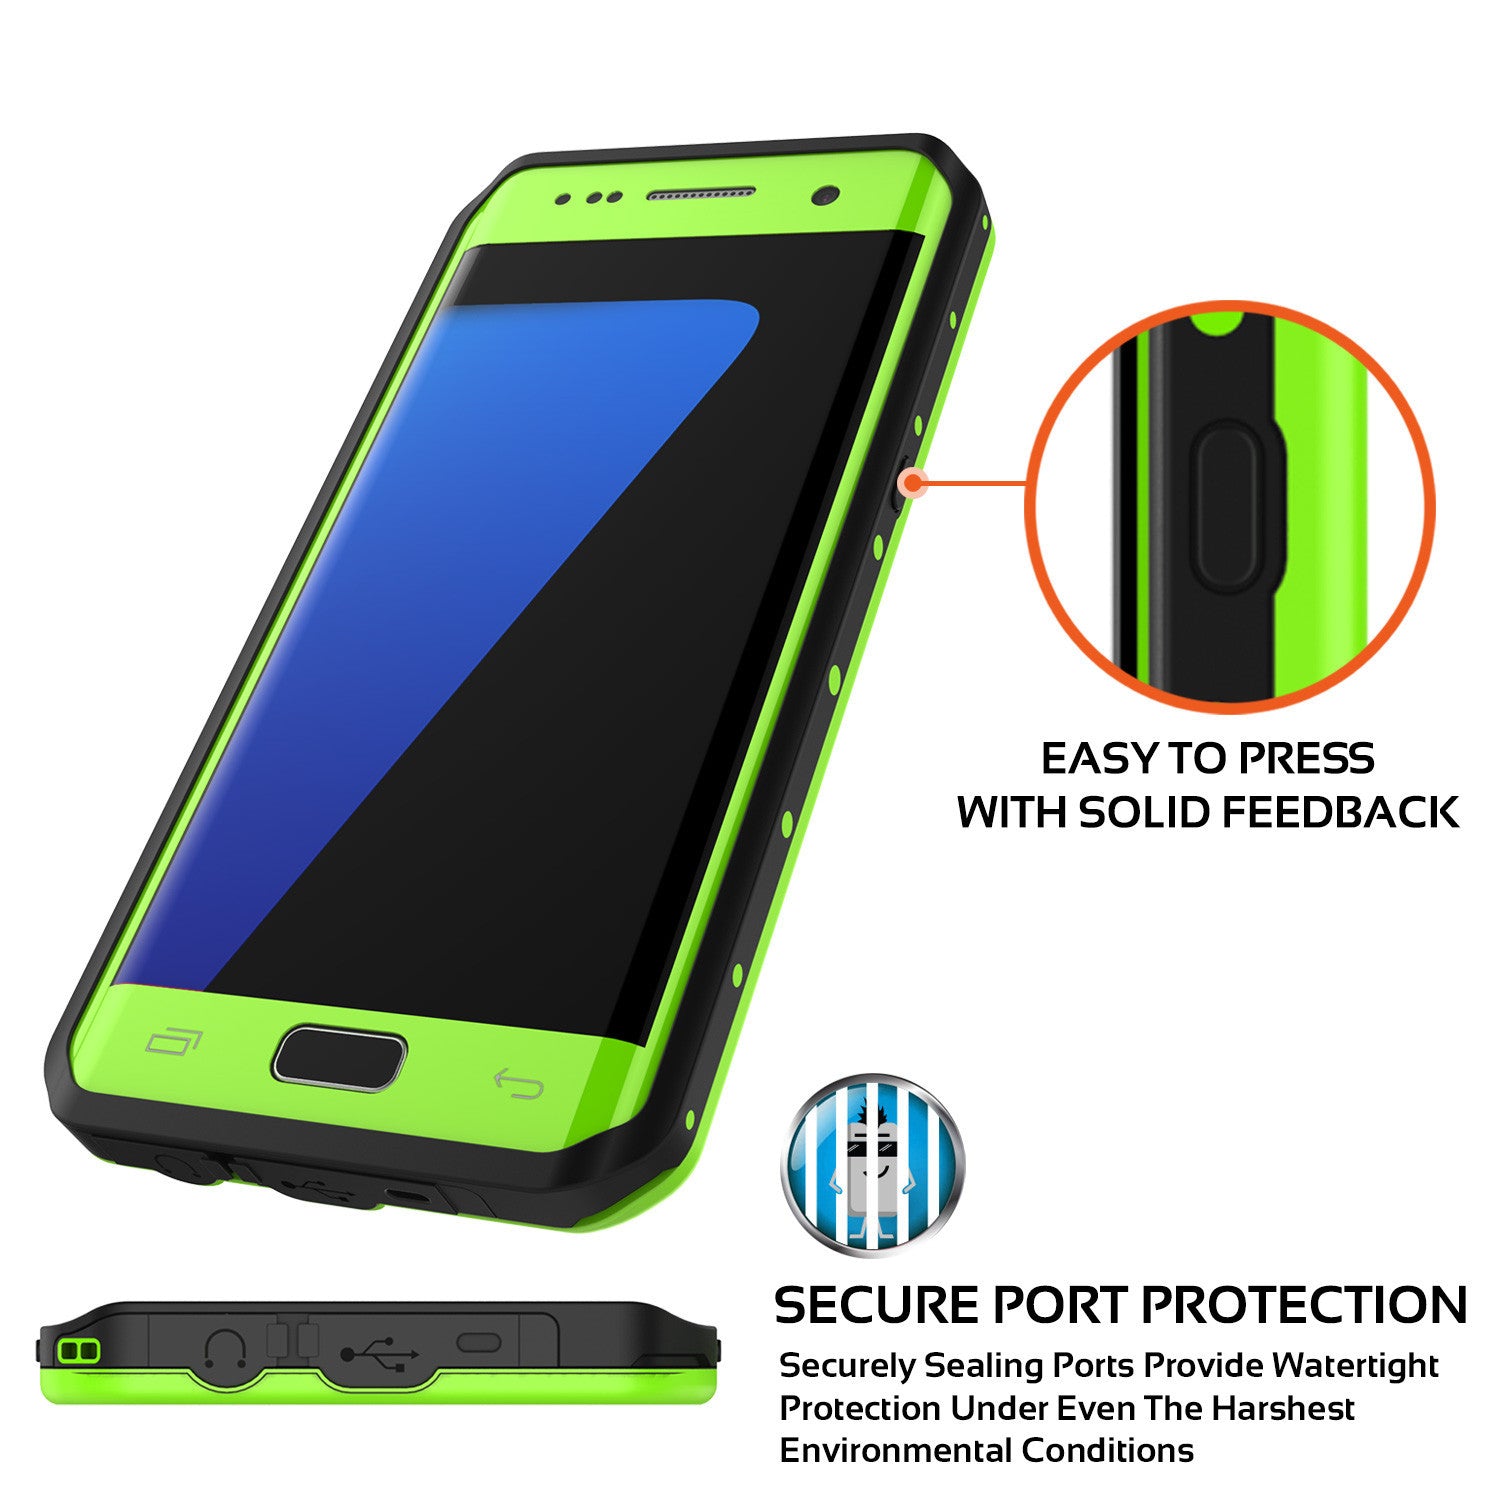 PUNKCASE - Studstar Series Snowproof Case for Galaxy S7 Edge | Light Green